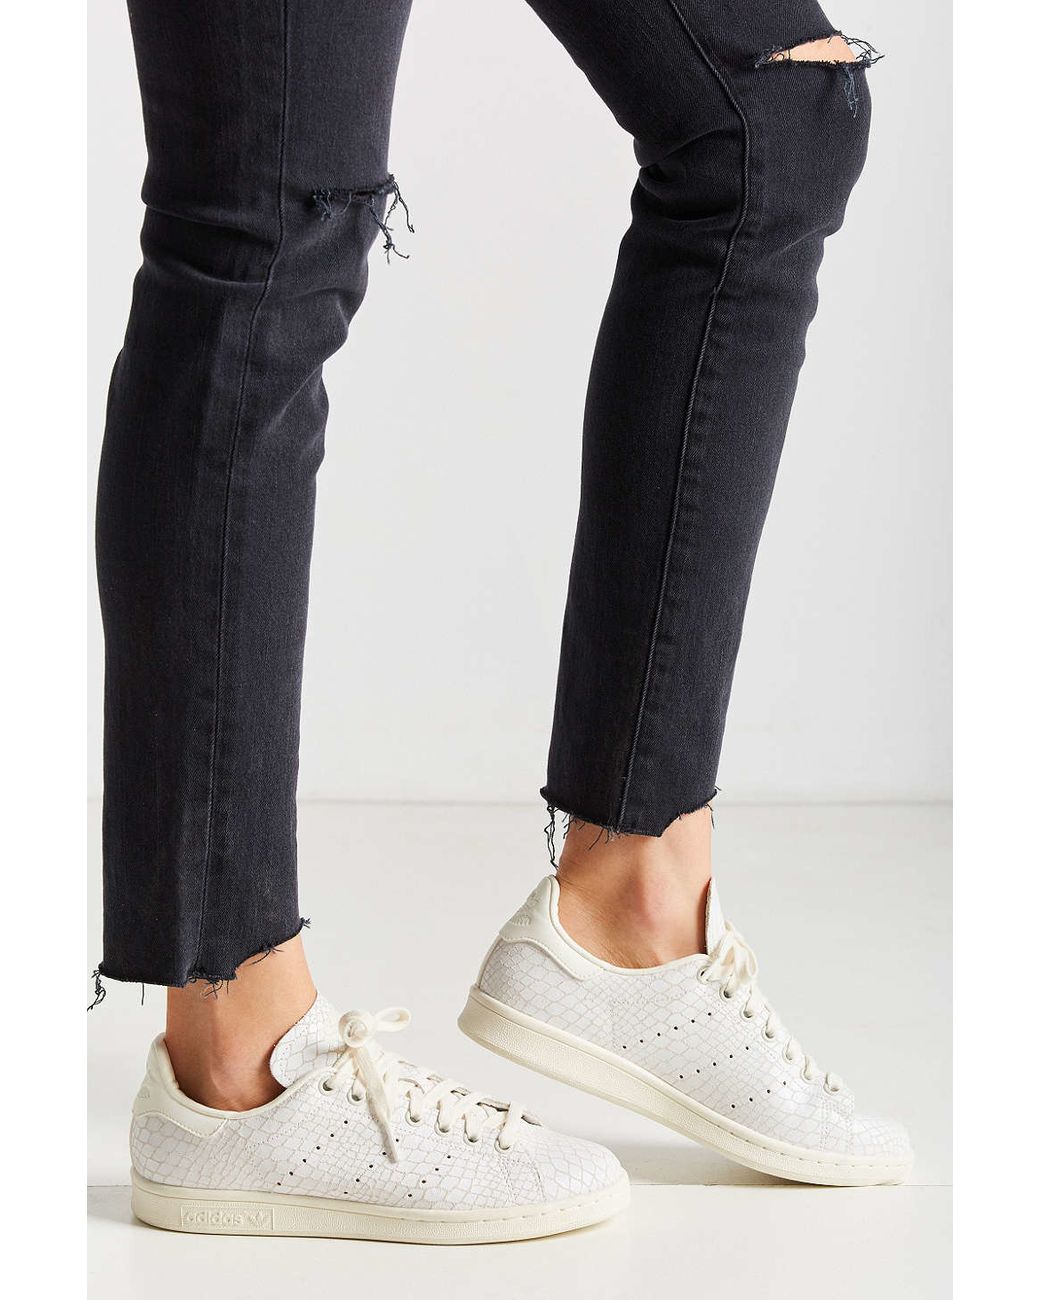 Vriend Mijnwerker Walging adidas Originals Stan Smith Croc-Embossed Leather Low-Top Sneakers in White  | Lyst